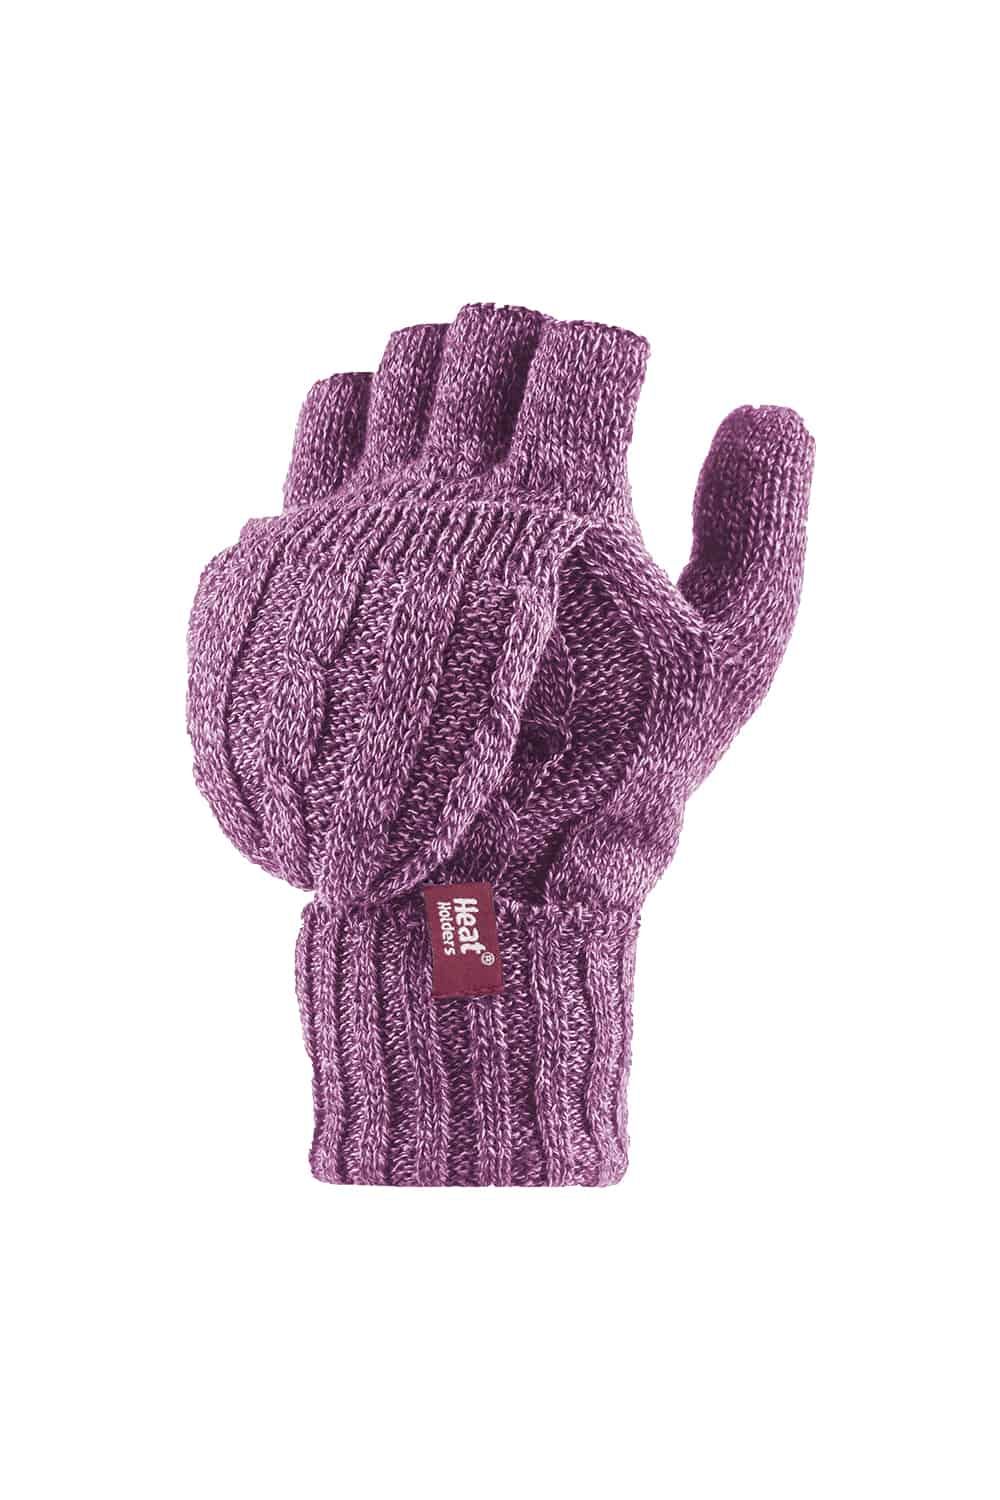 Ladies Thermal Cable Knit 2.3 tog Heatweaver Gloves HEAT HOLDERS 